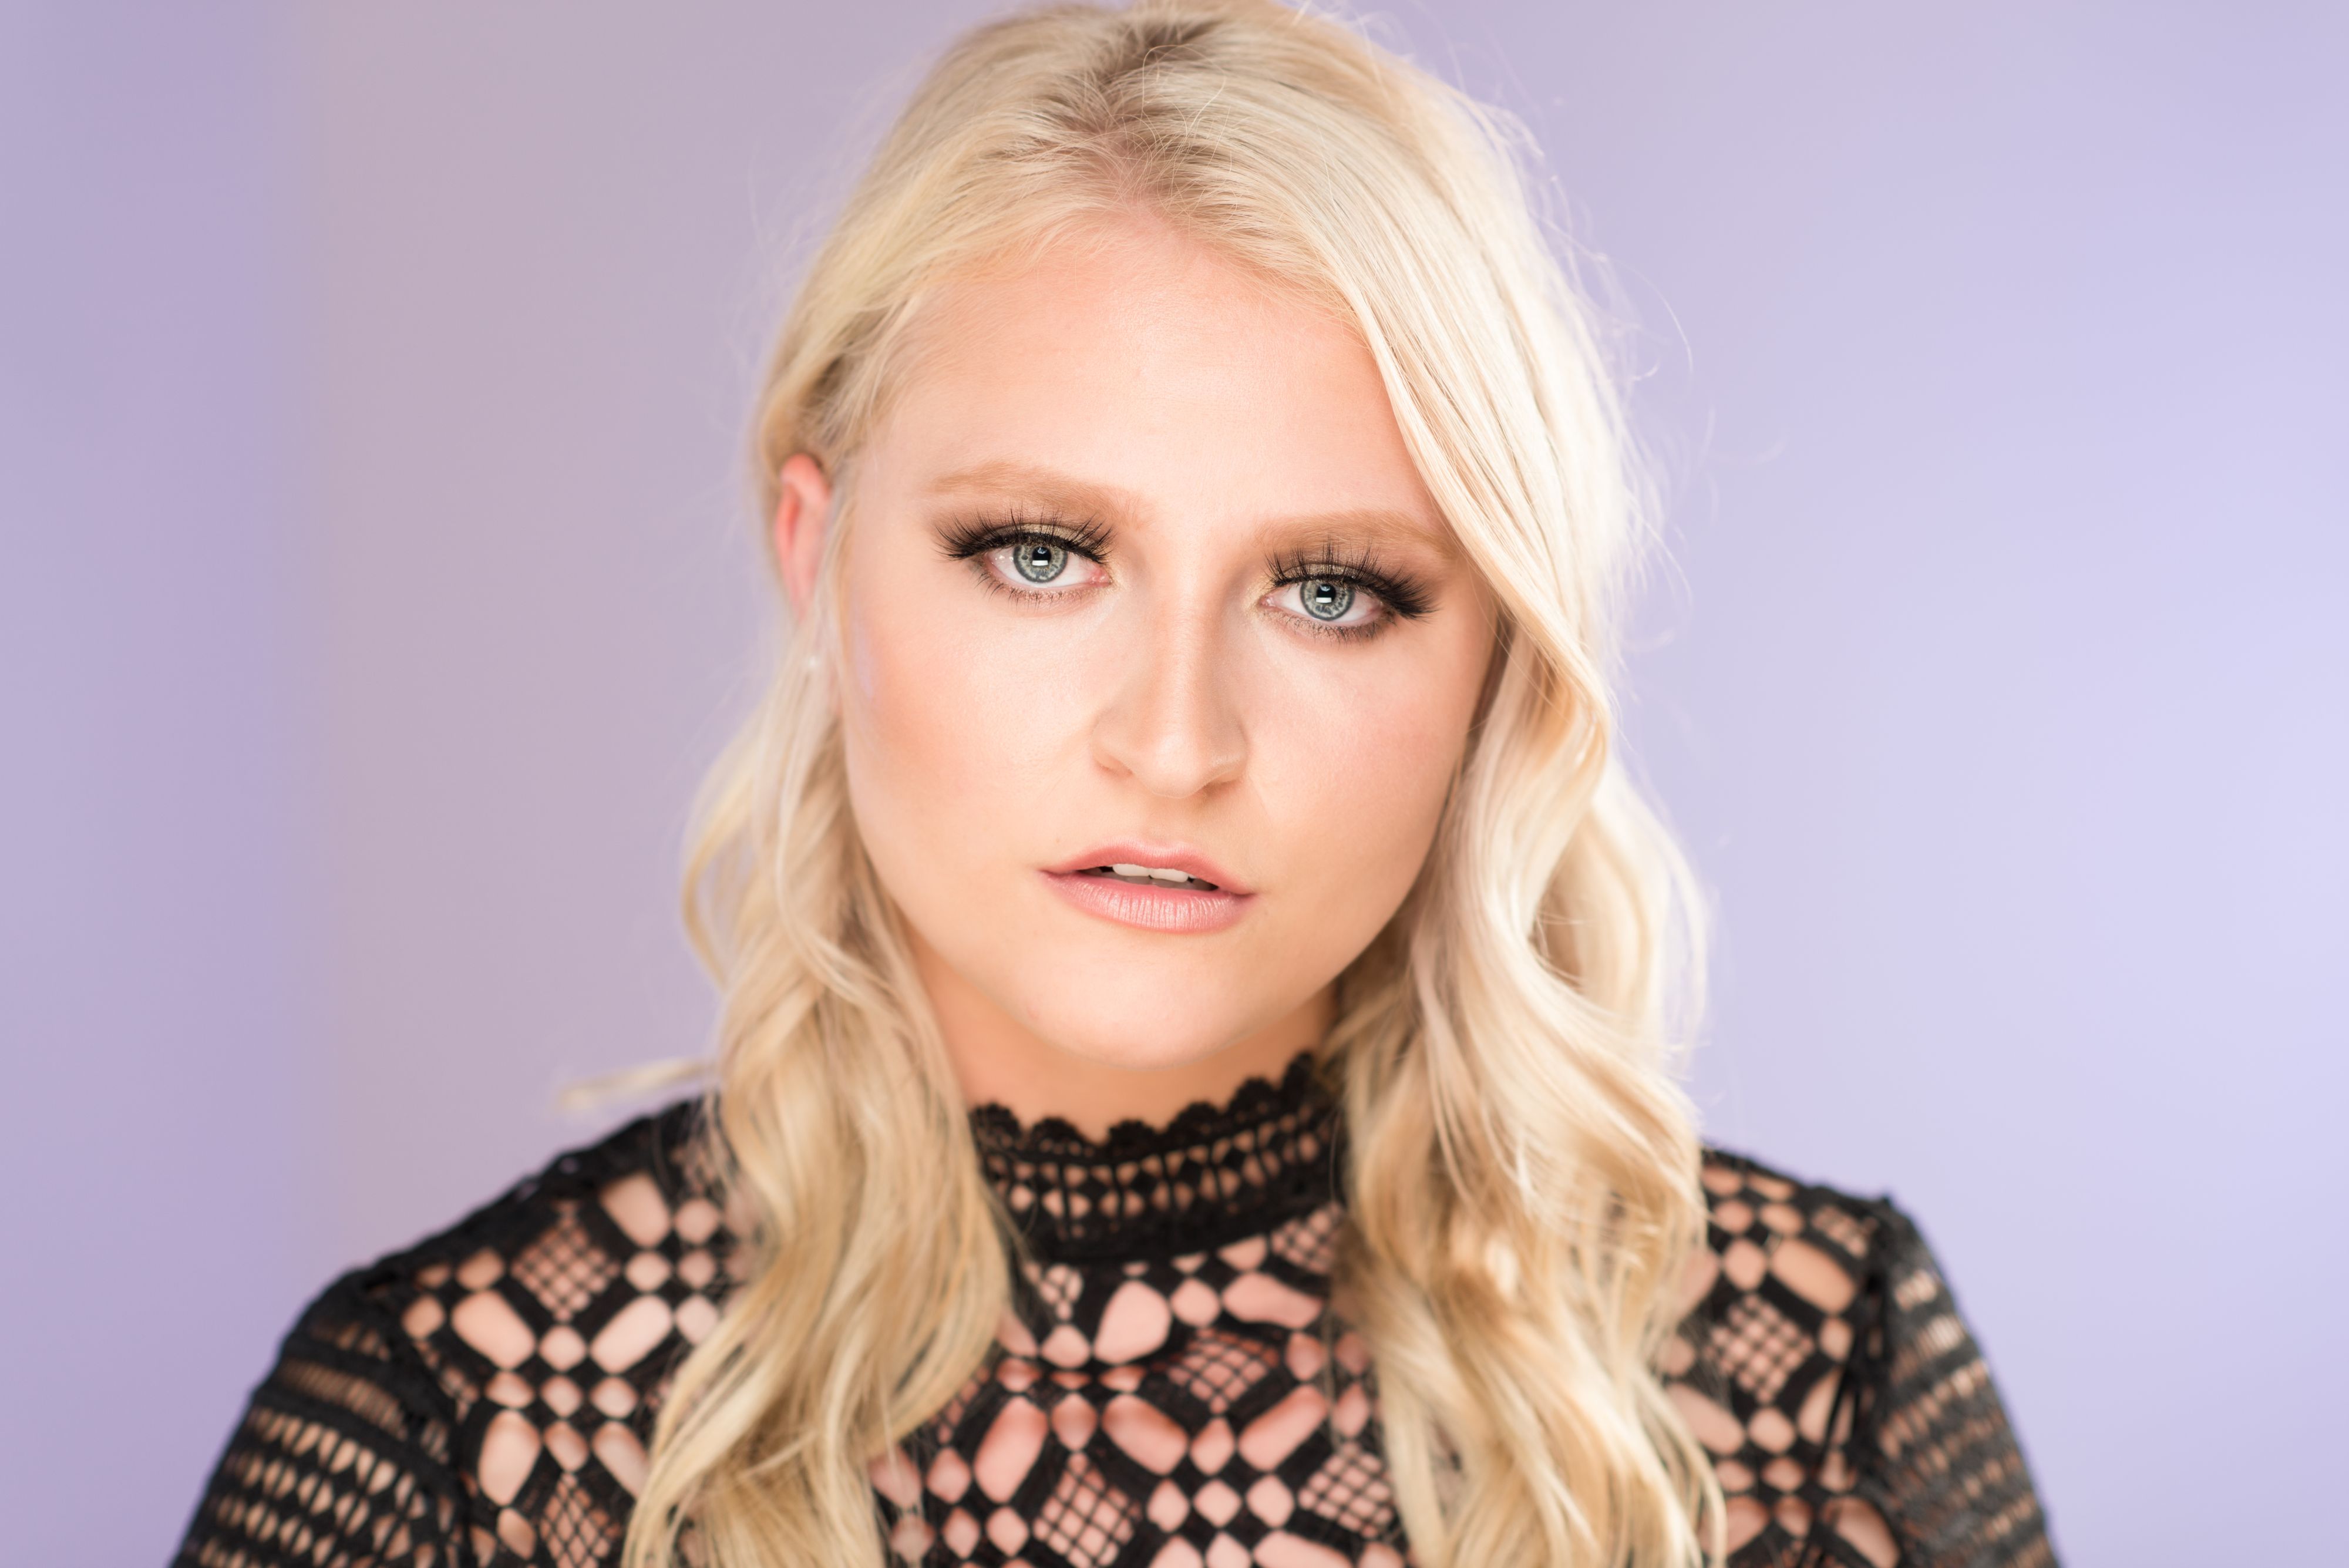 Beauty shot of blonde model wearing black lace on blue background